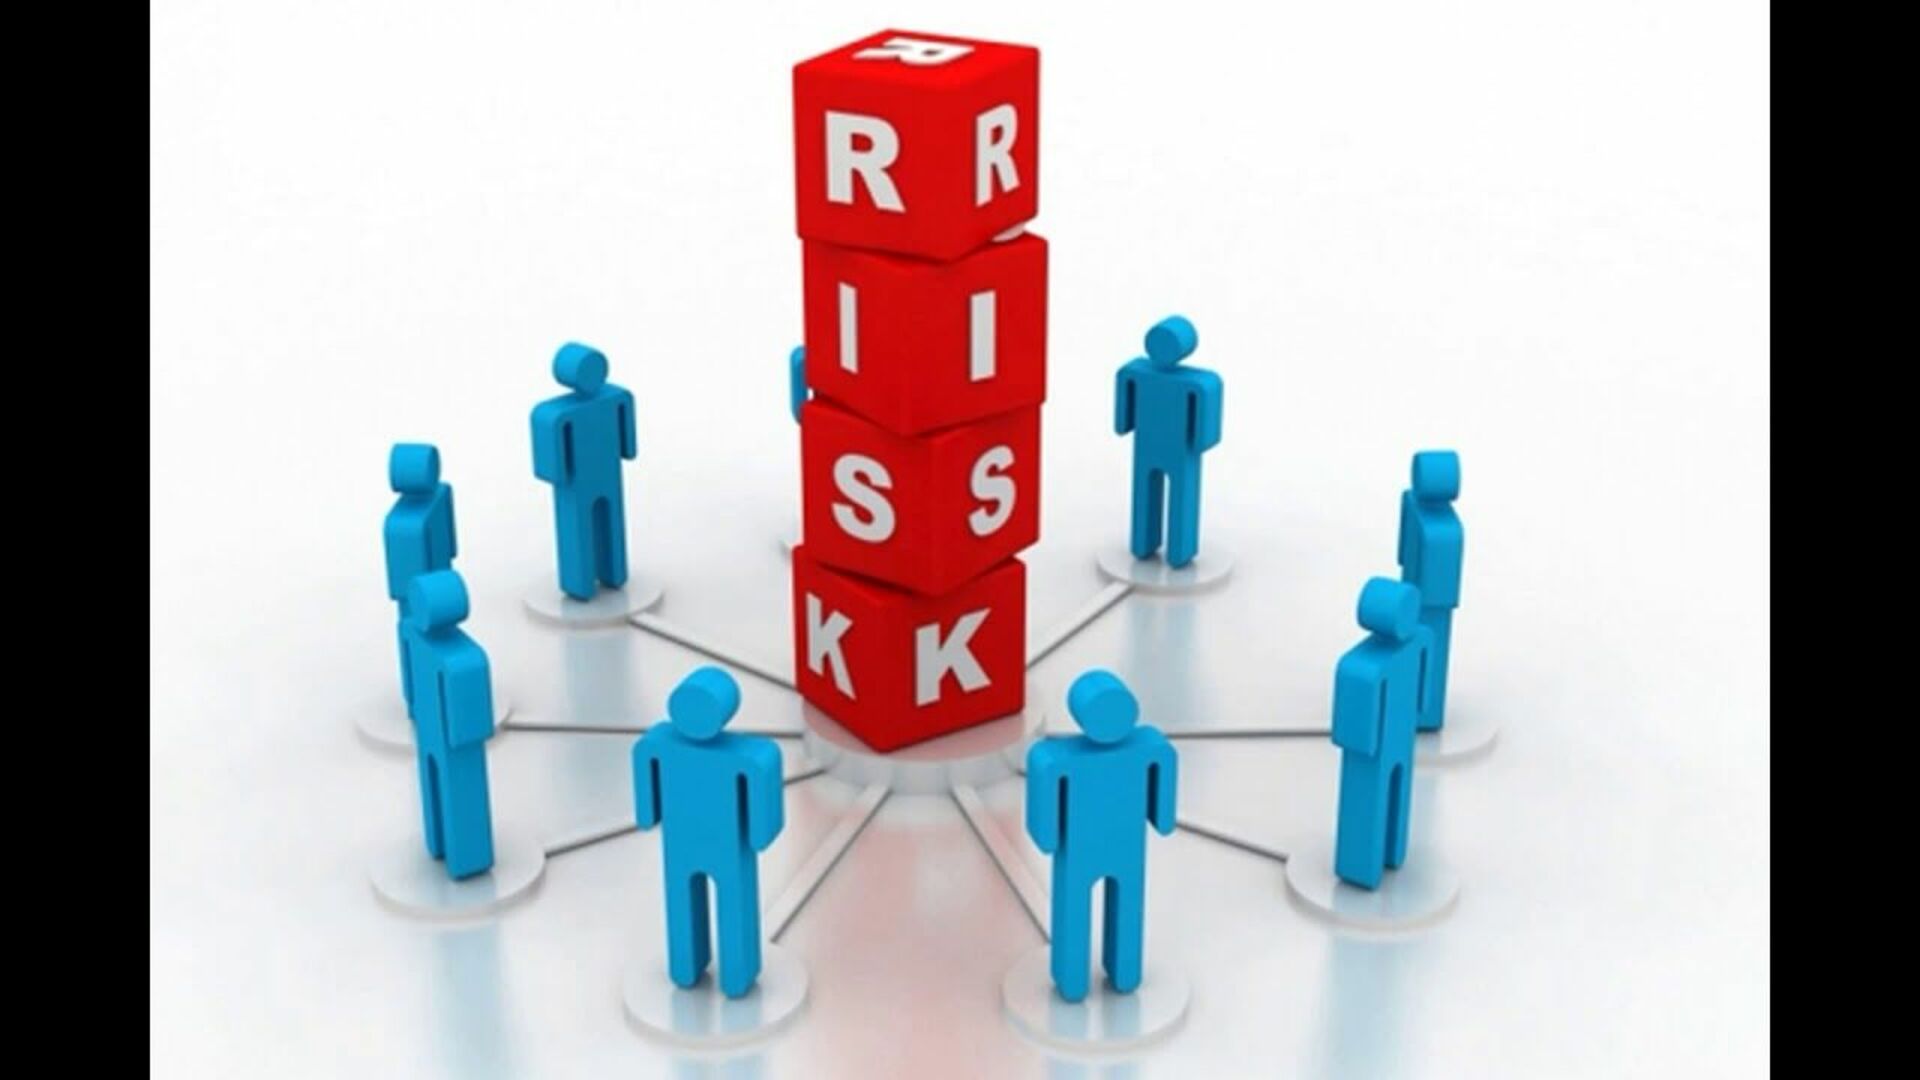 Business risk. Риск-менеджмент. Управление рисками человечки. Человечек с риск-менеджментом. Риски проекта человечки.